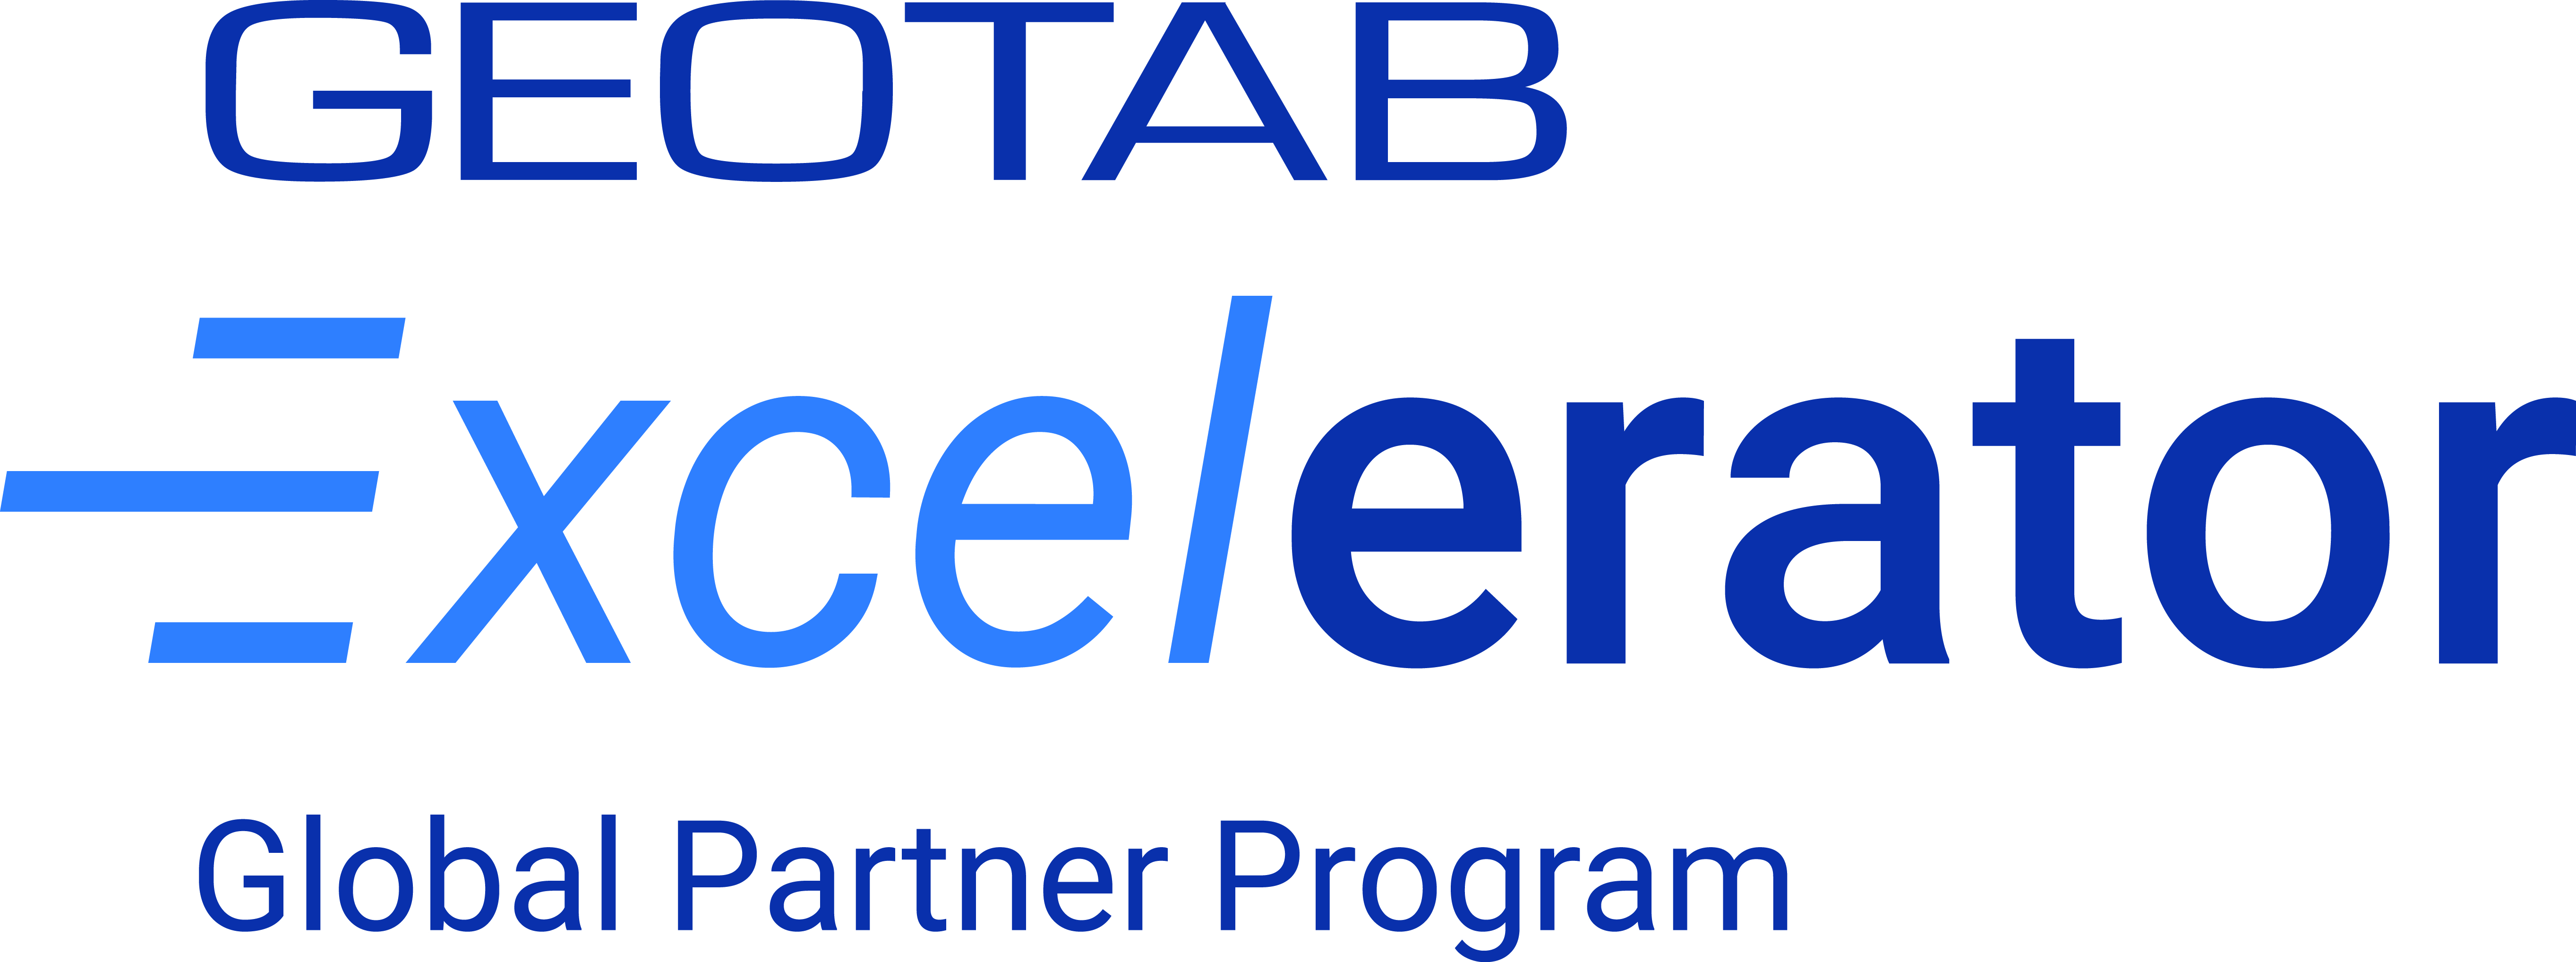 geotab global partner program logo